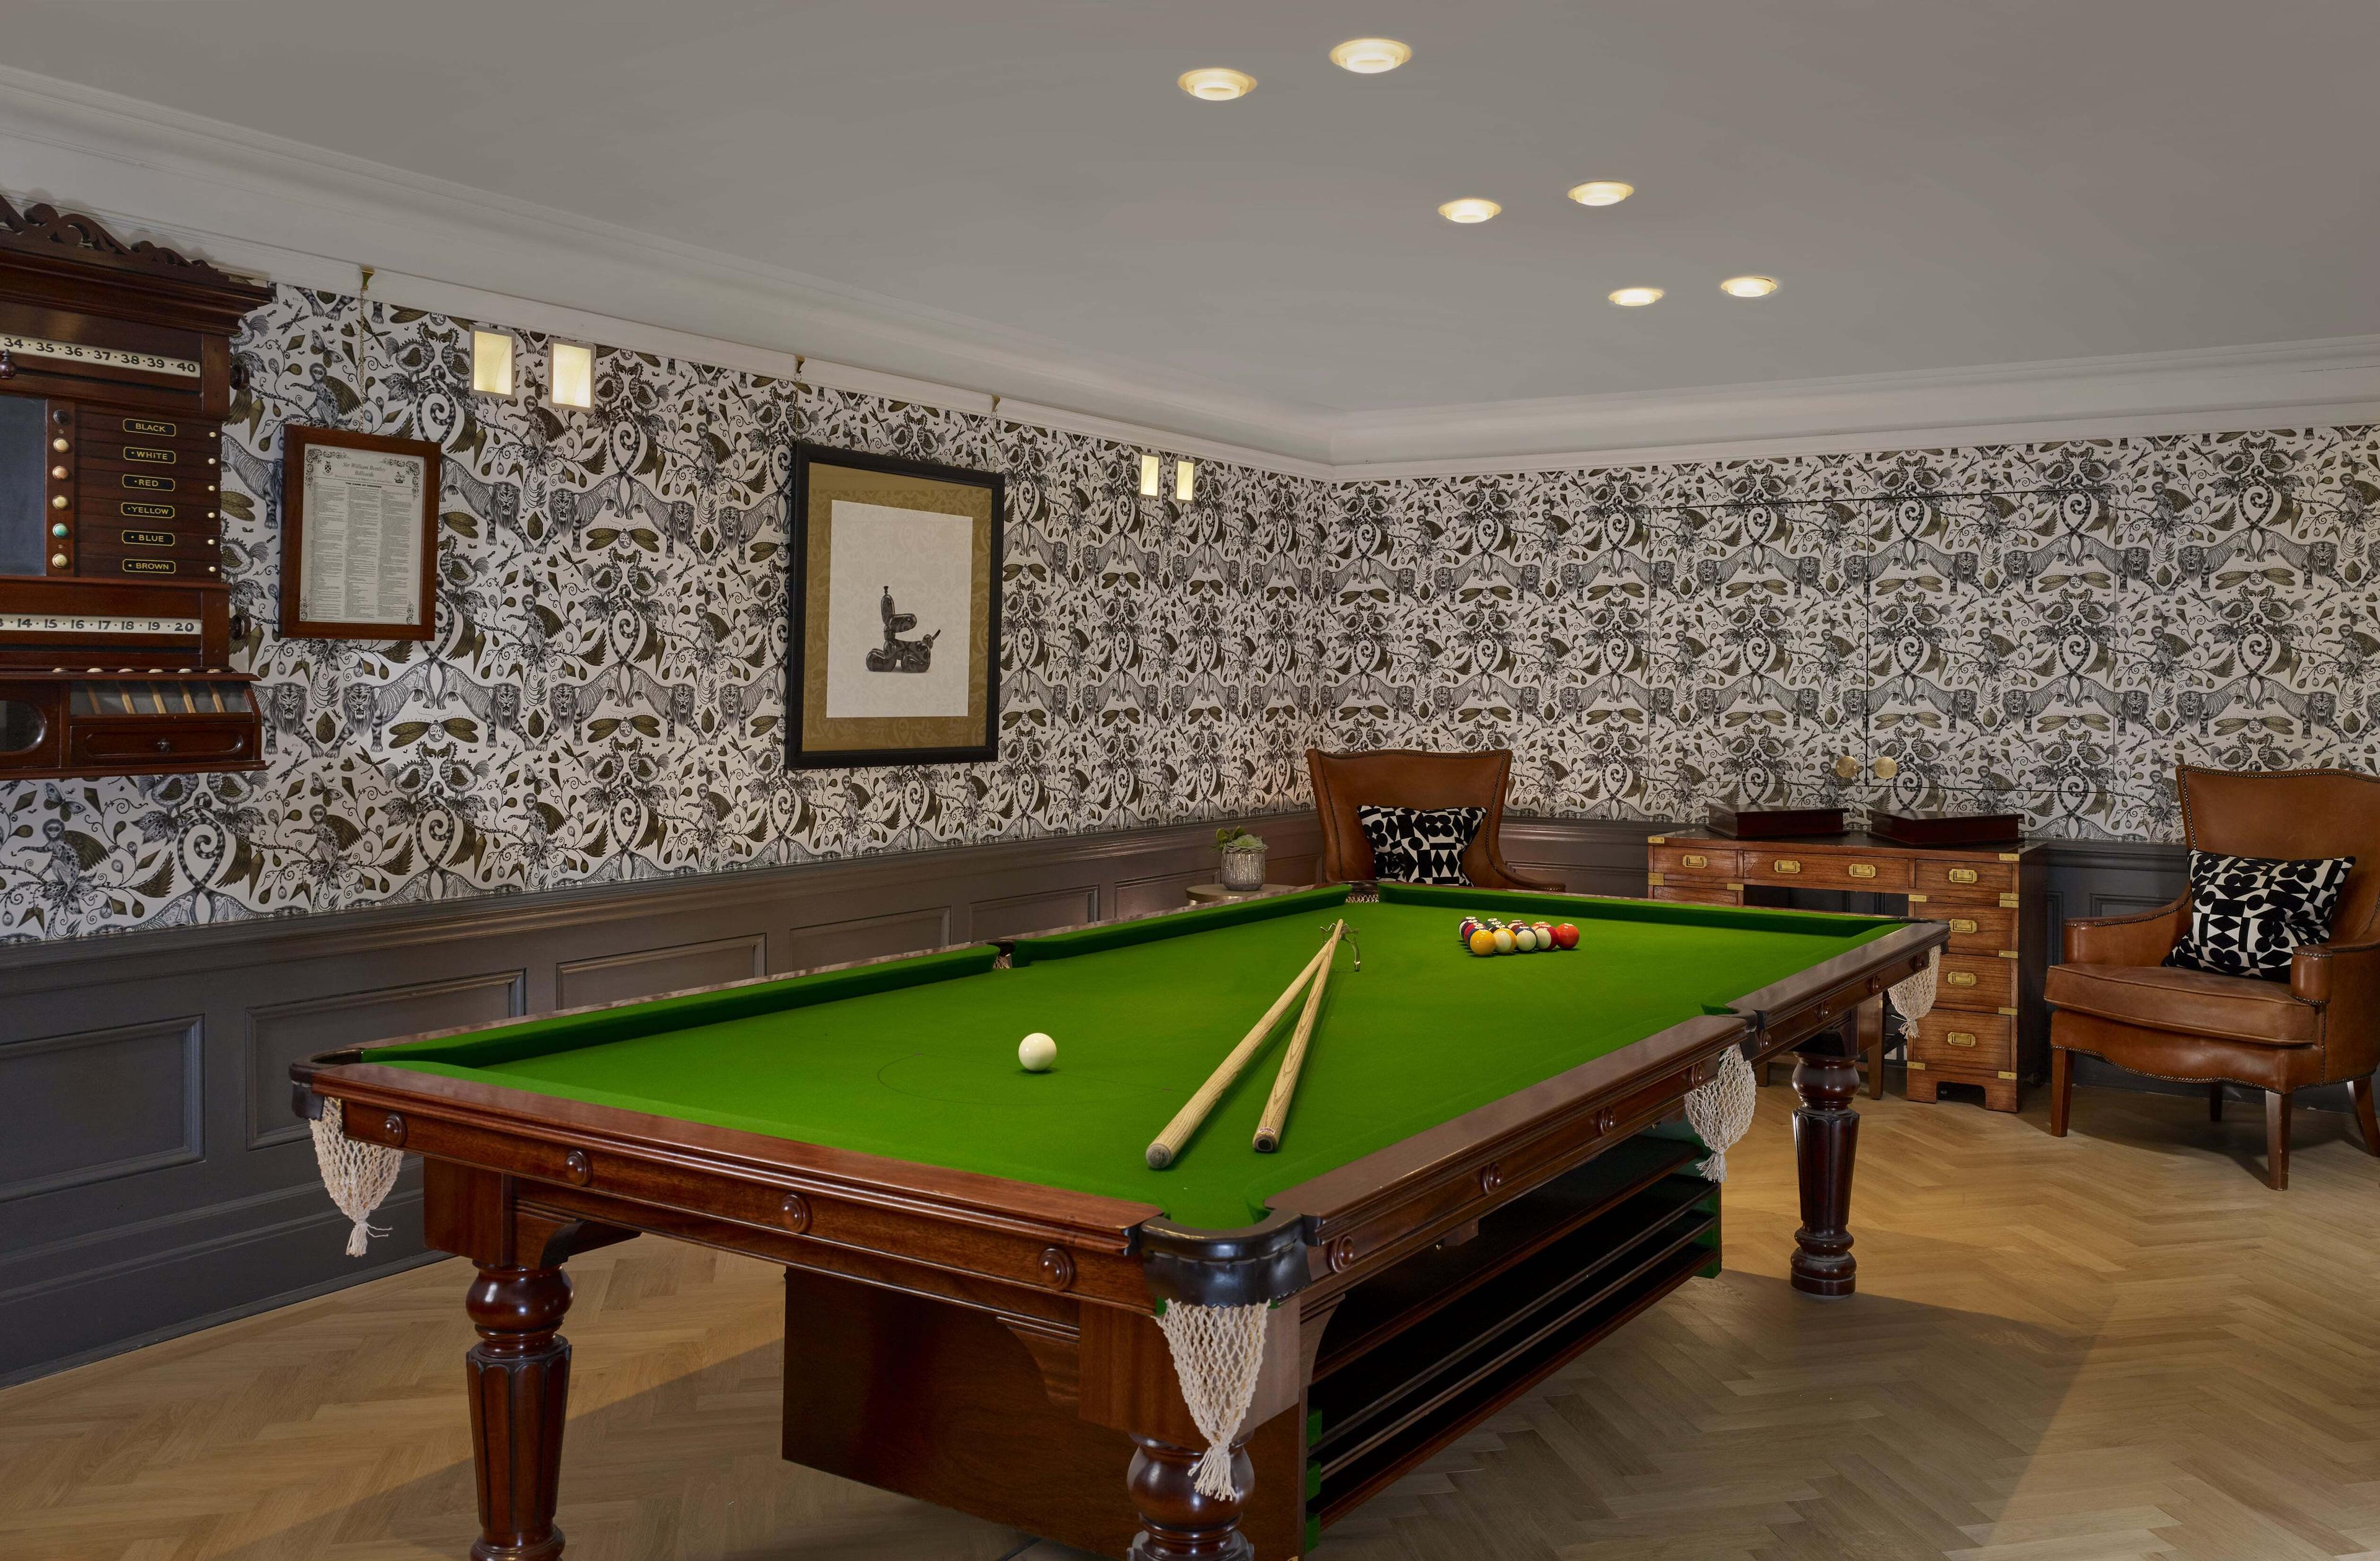 The Billiard Room, Holmes Hotel photo #1